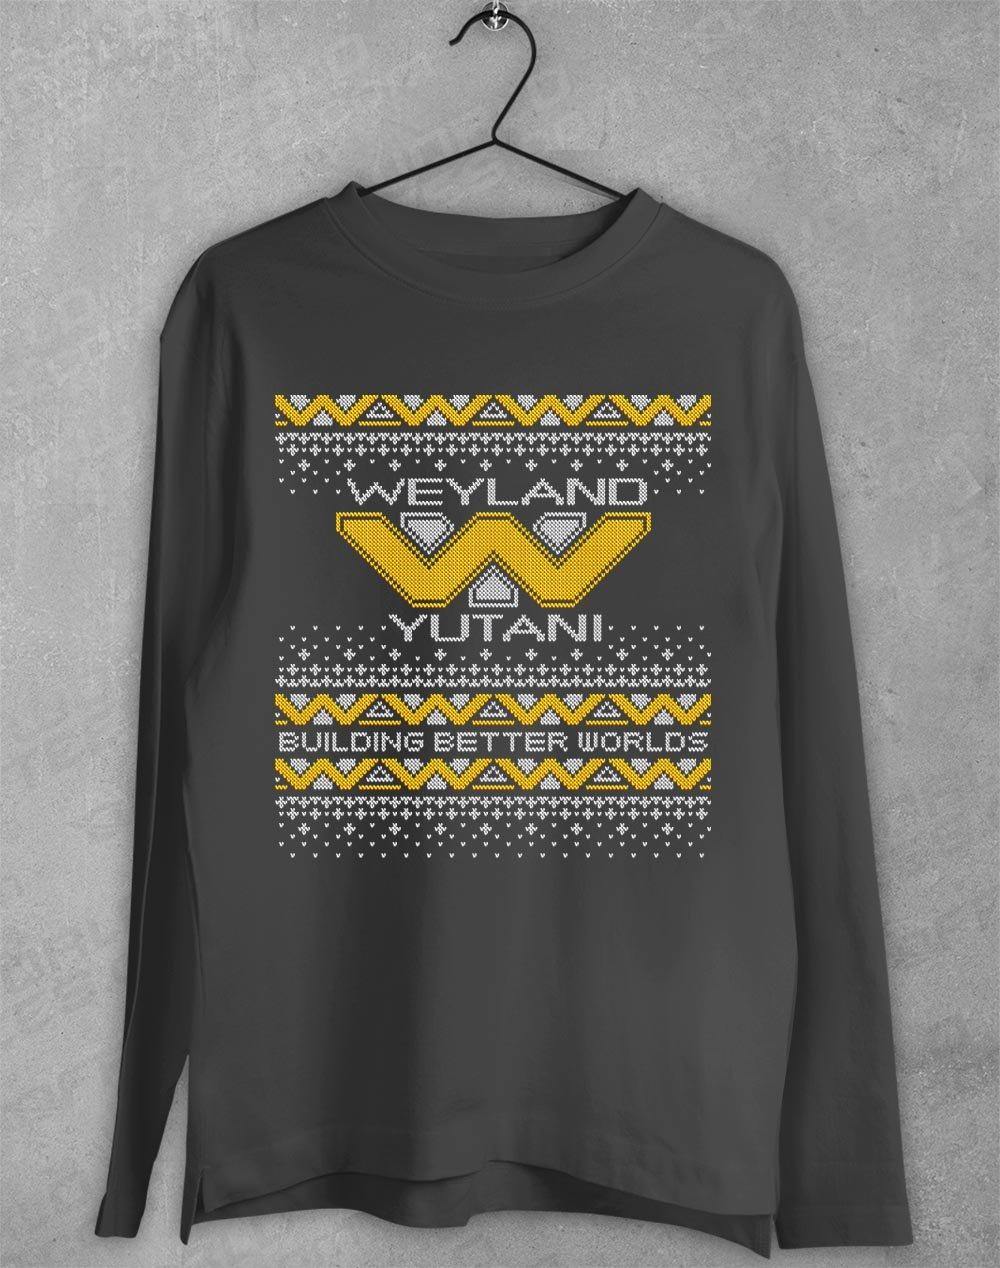 Weyland Yutani Festive Knitted-Look Long Sleeve T-Shirt S / Charcoal  - Off World Tees